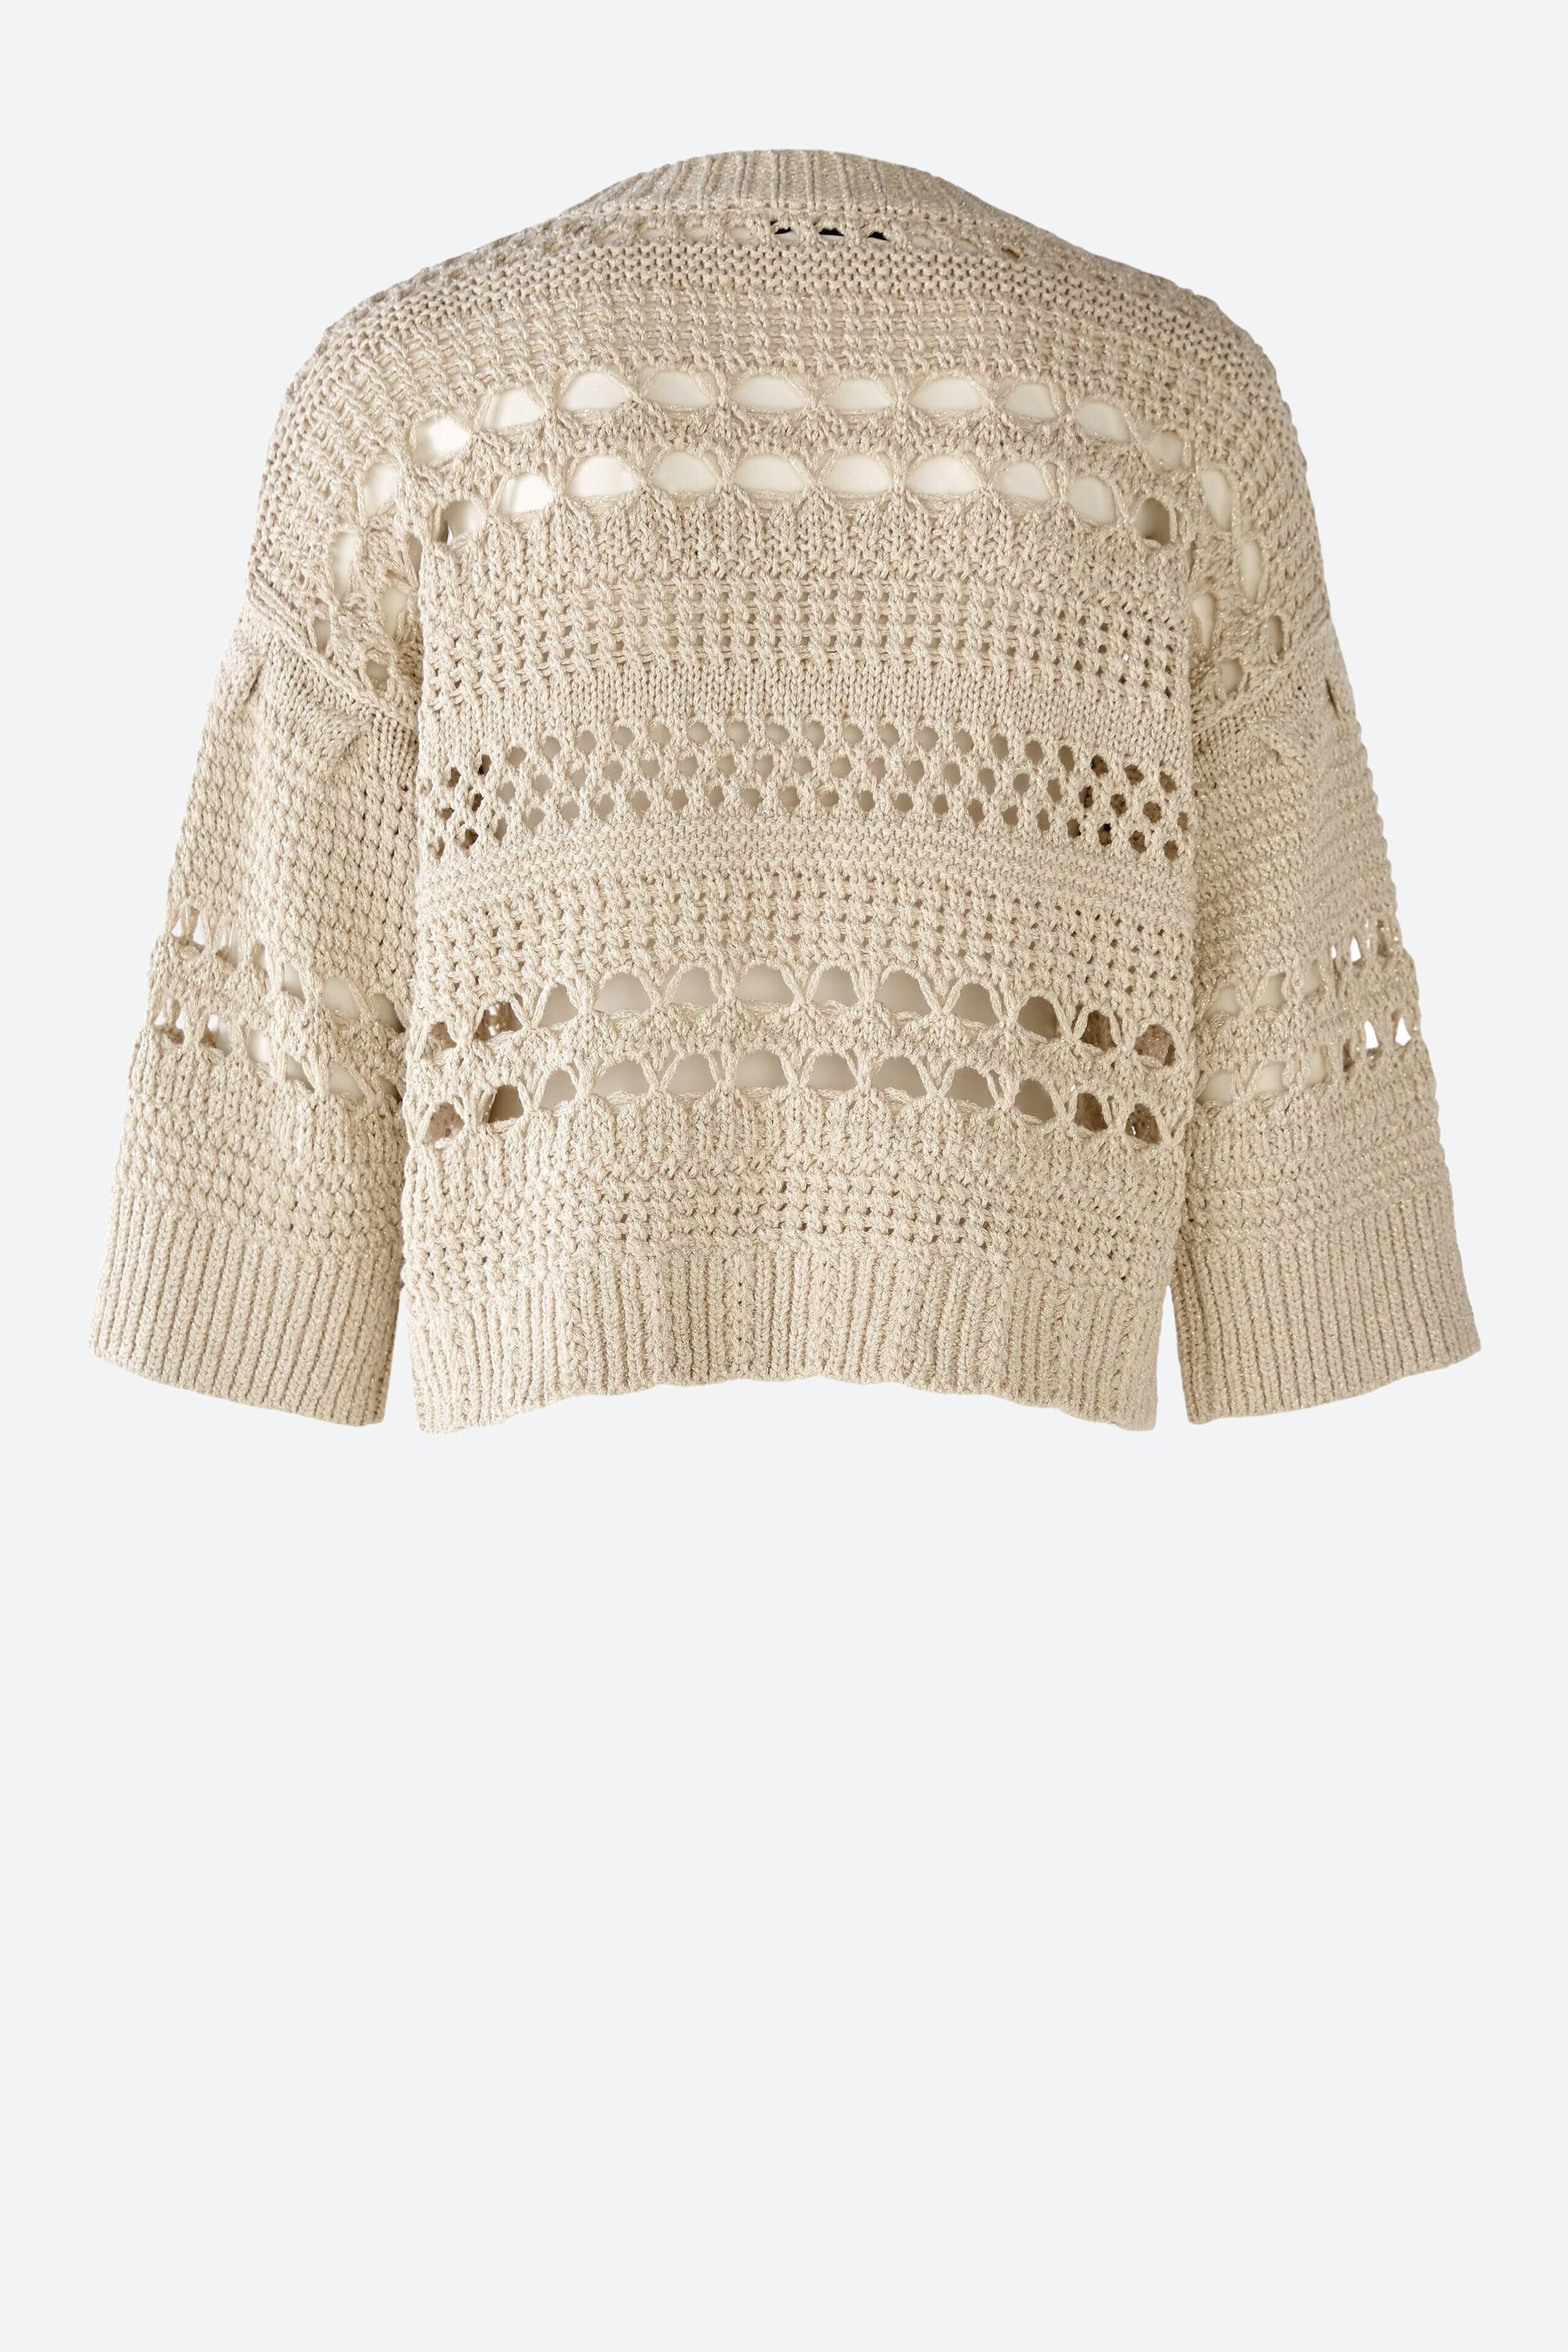 Cotton Crochet Top in Whitecap Grey